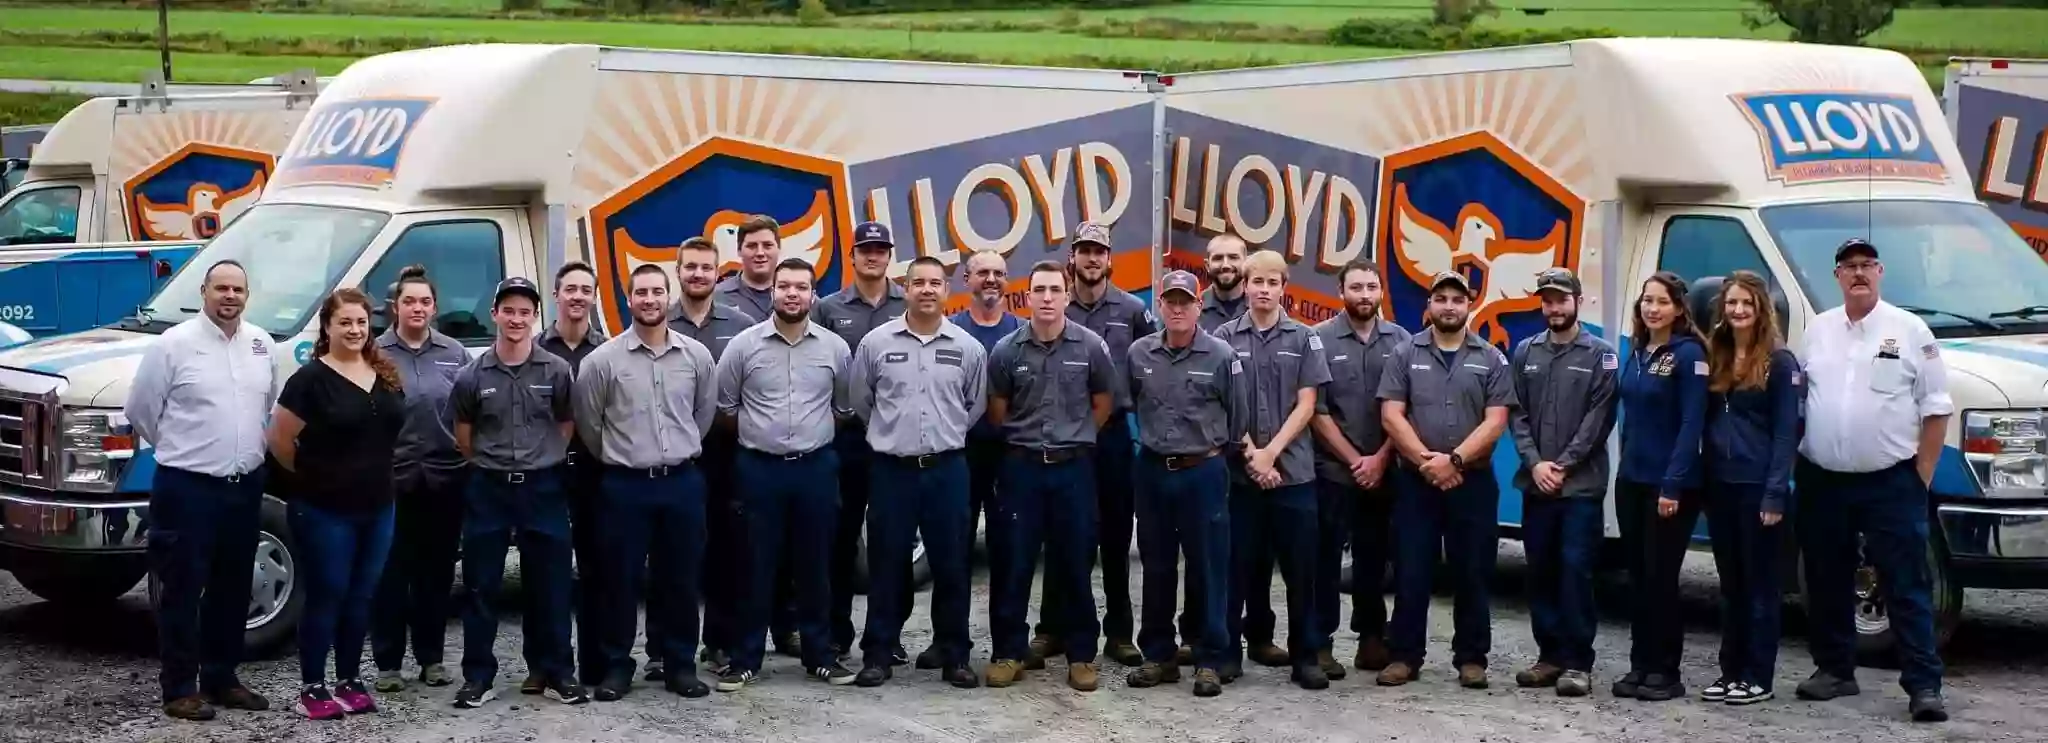 Lloyd Home Service